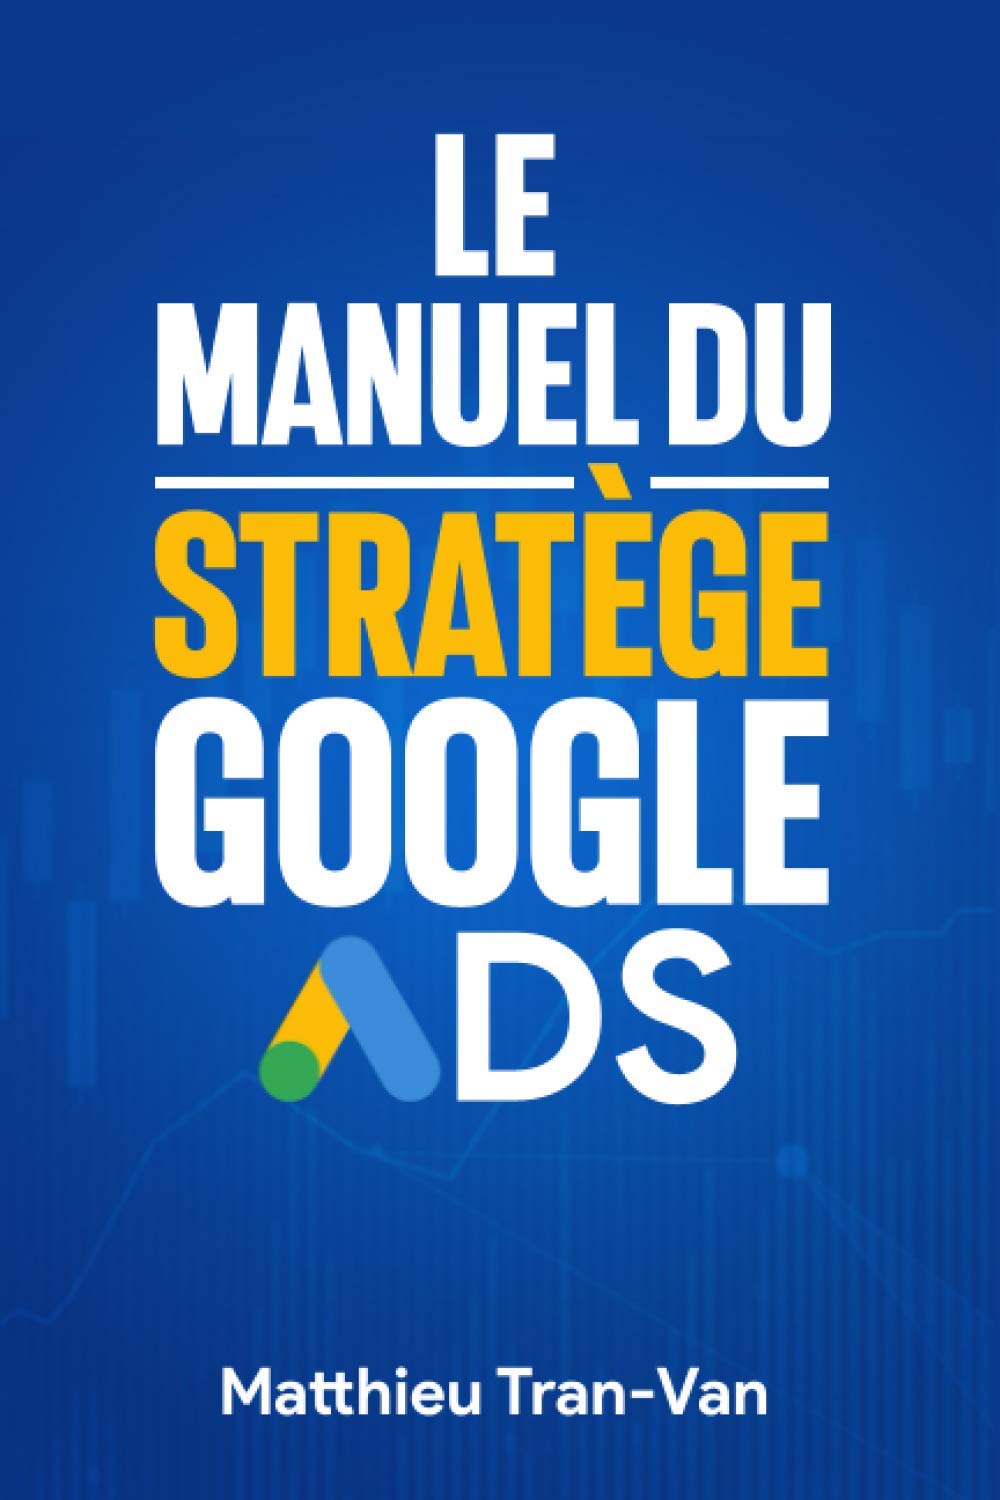 Le Manuel du Stratège Google Ads